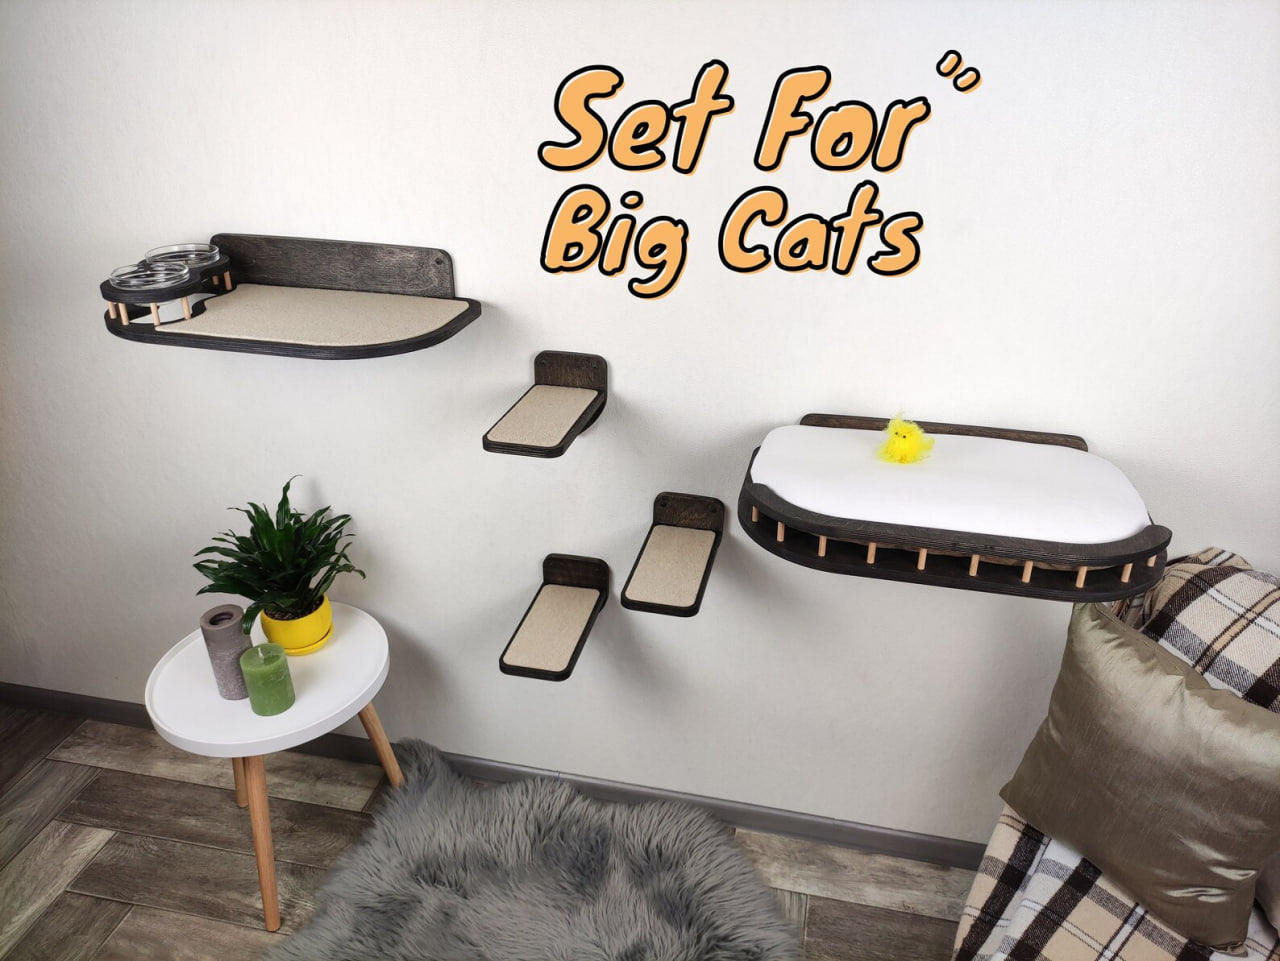 Cat wall shelves - set for big cats - Dark & Bed plus Feeding shelf